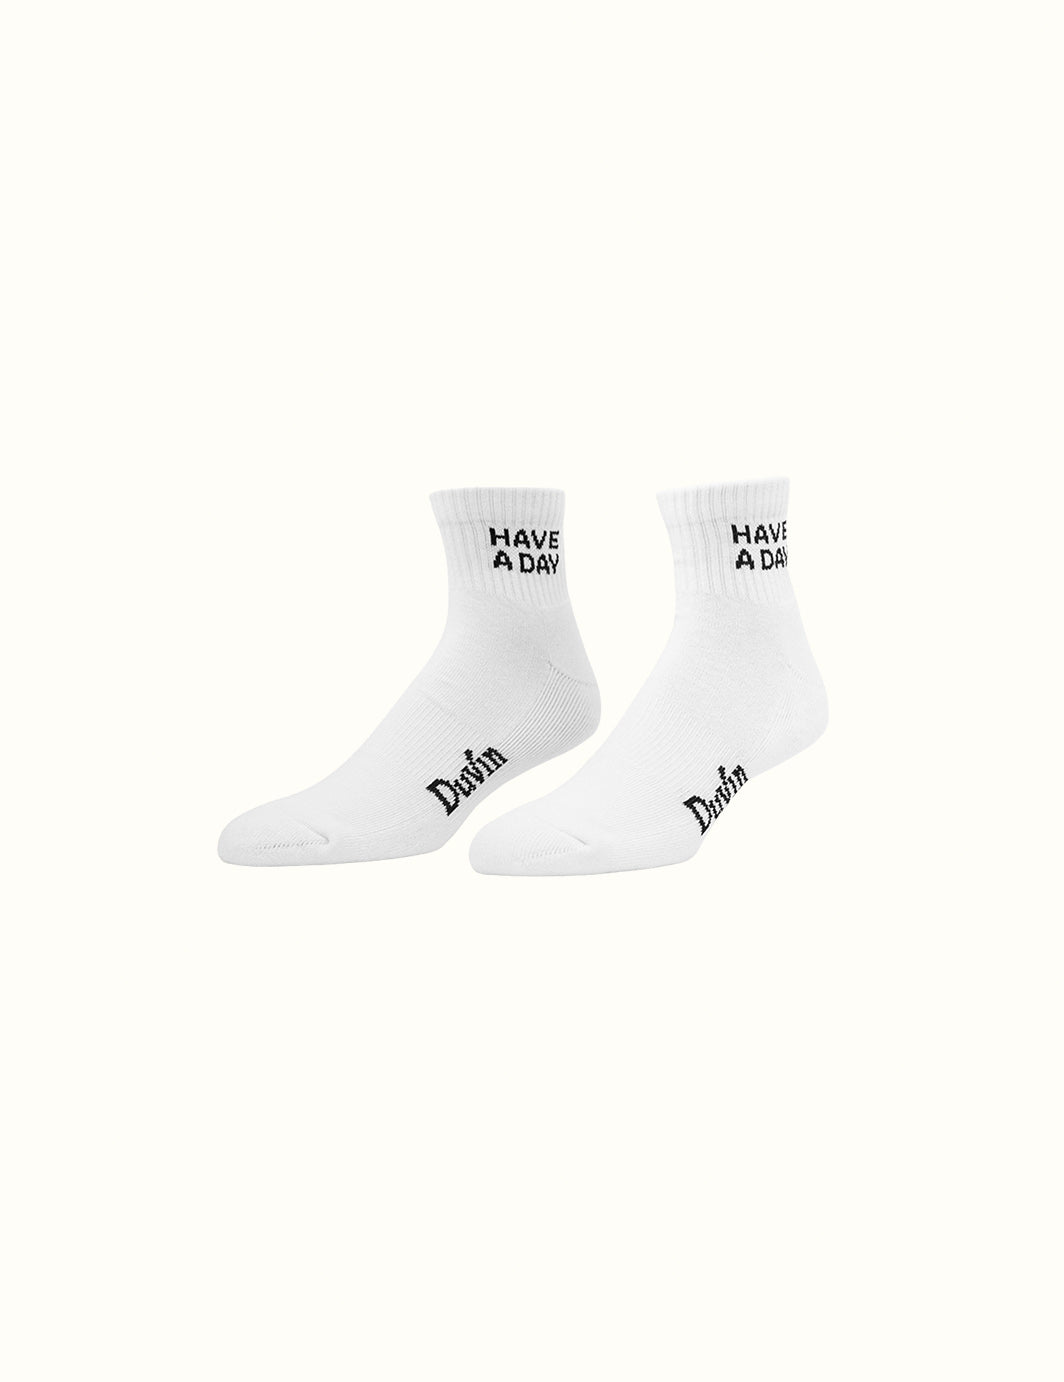 Men's Socks | Men's Low Cut Socks | Men's Mid Calf Socks - Duvin Design Co.